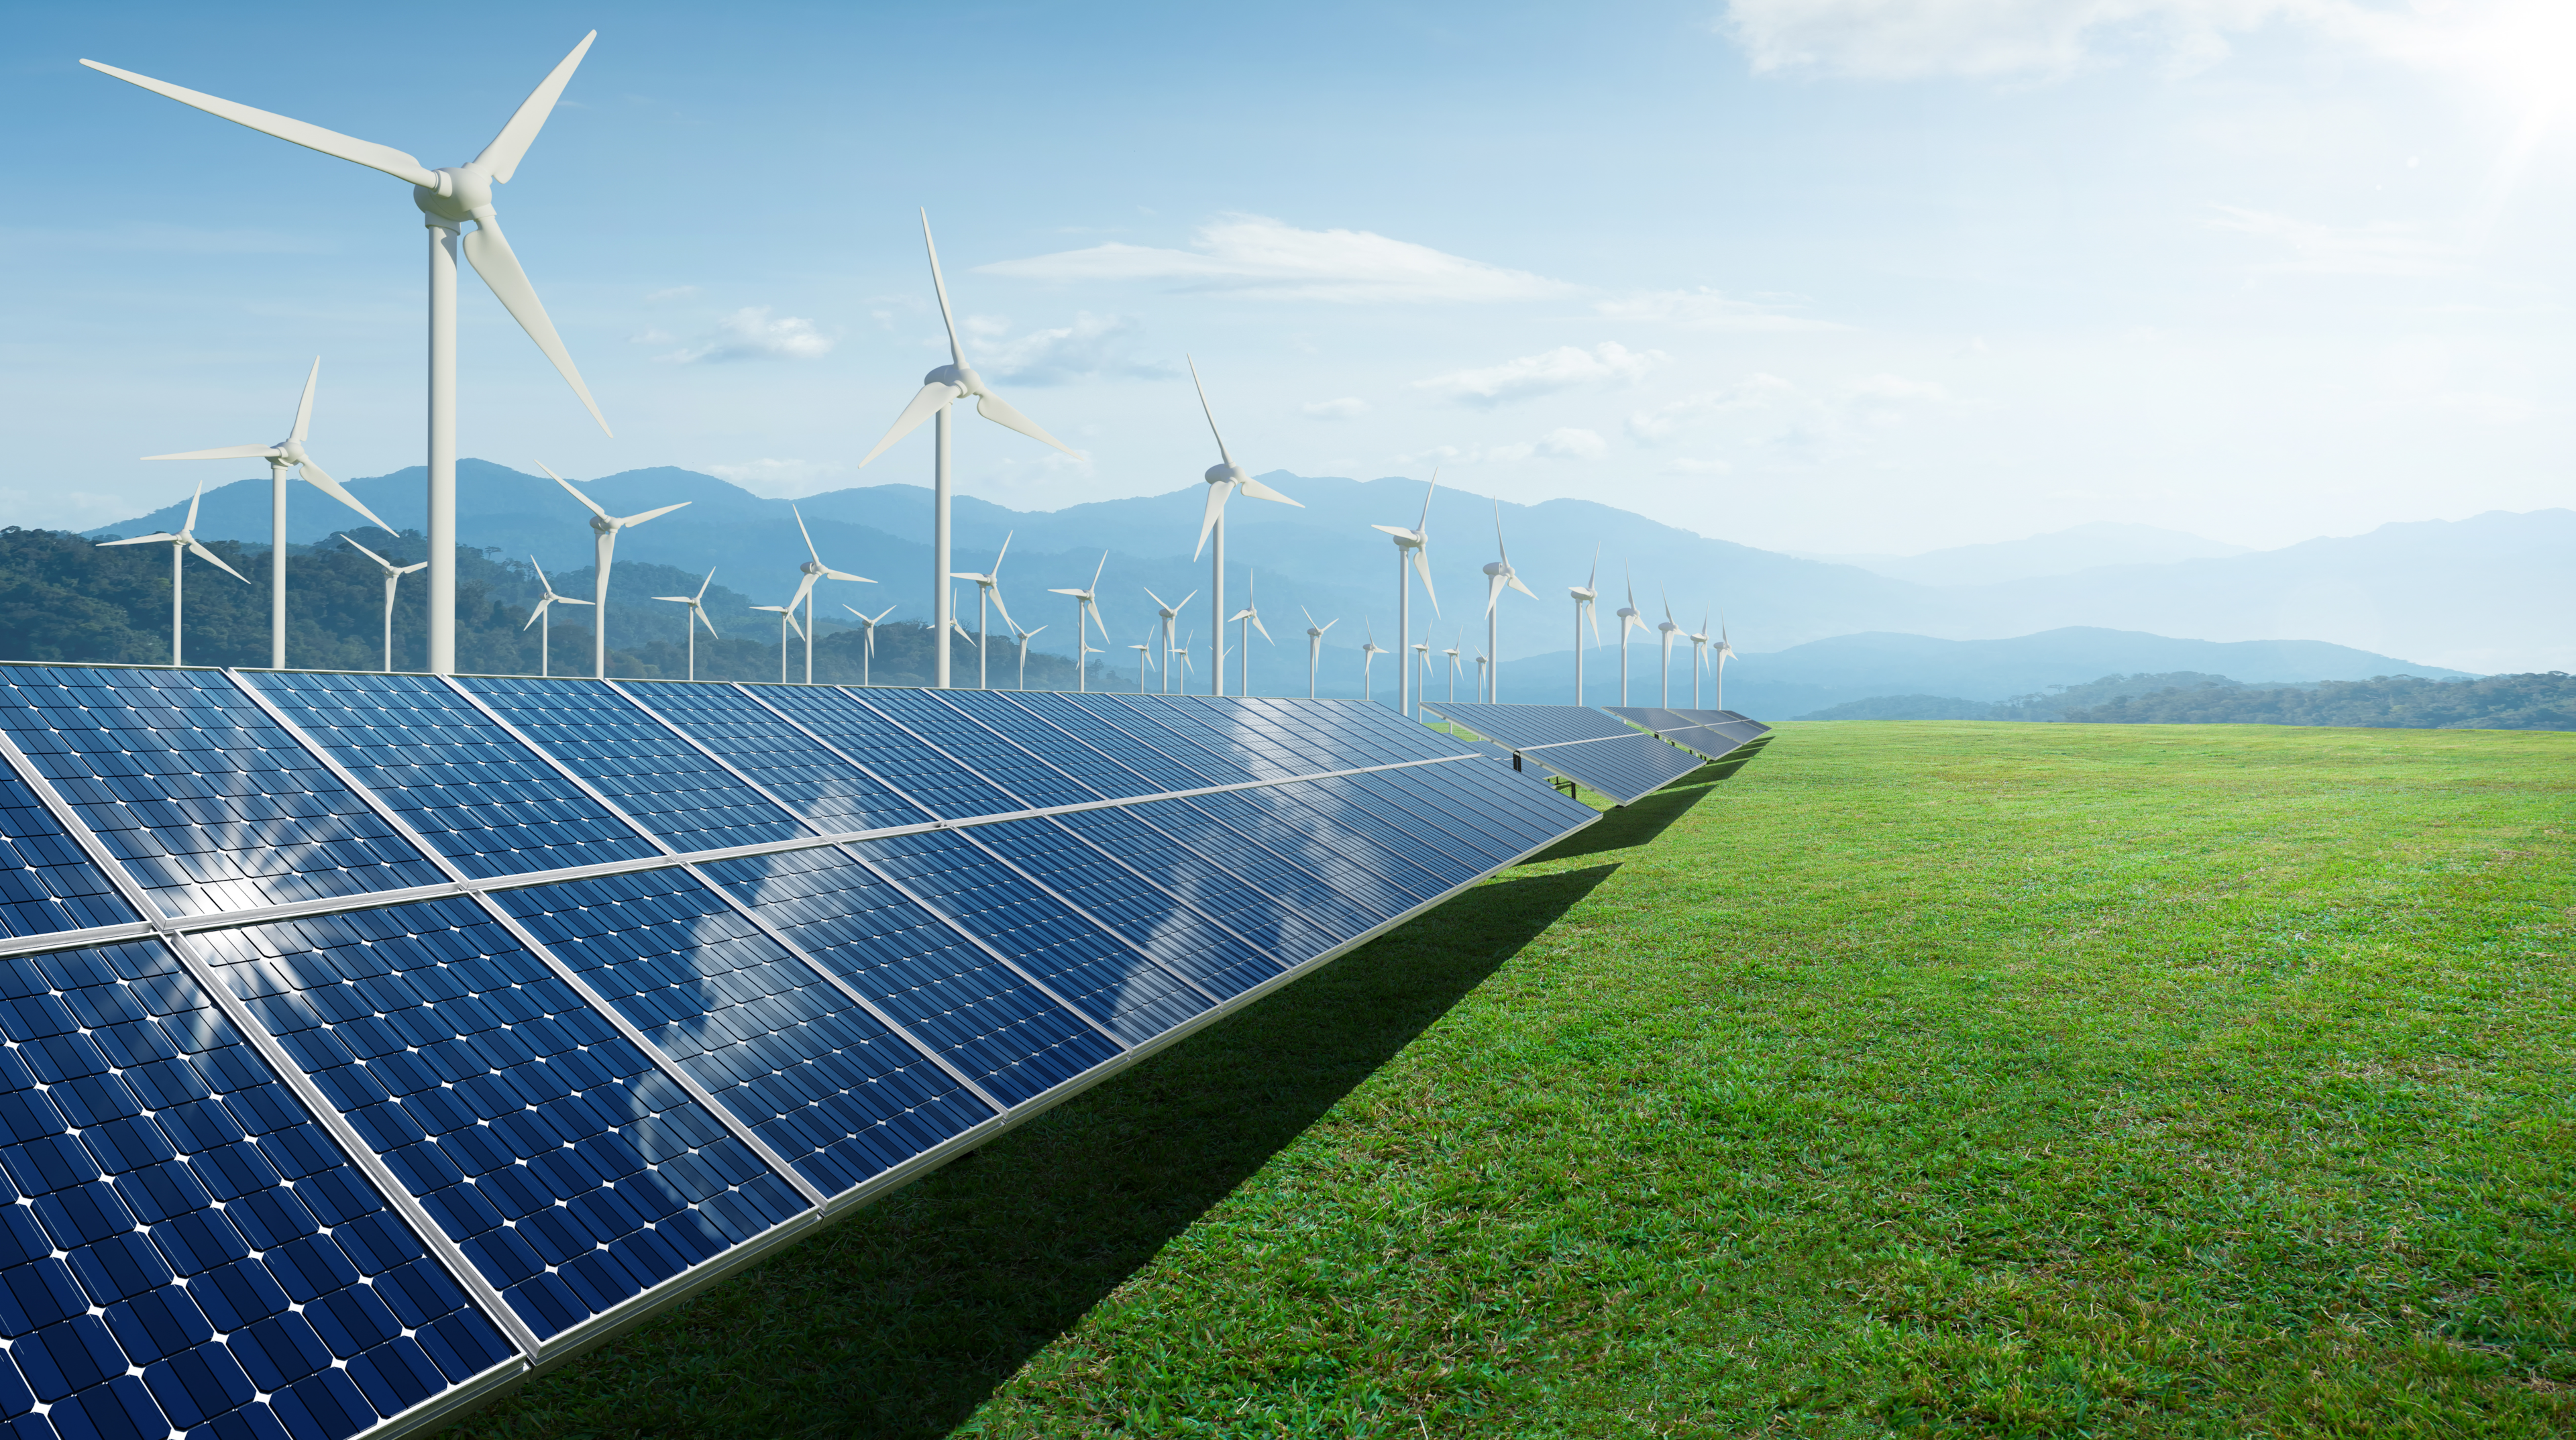 Renewable Energy Engineering: Solar panels and wind generators under blue sky